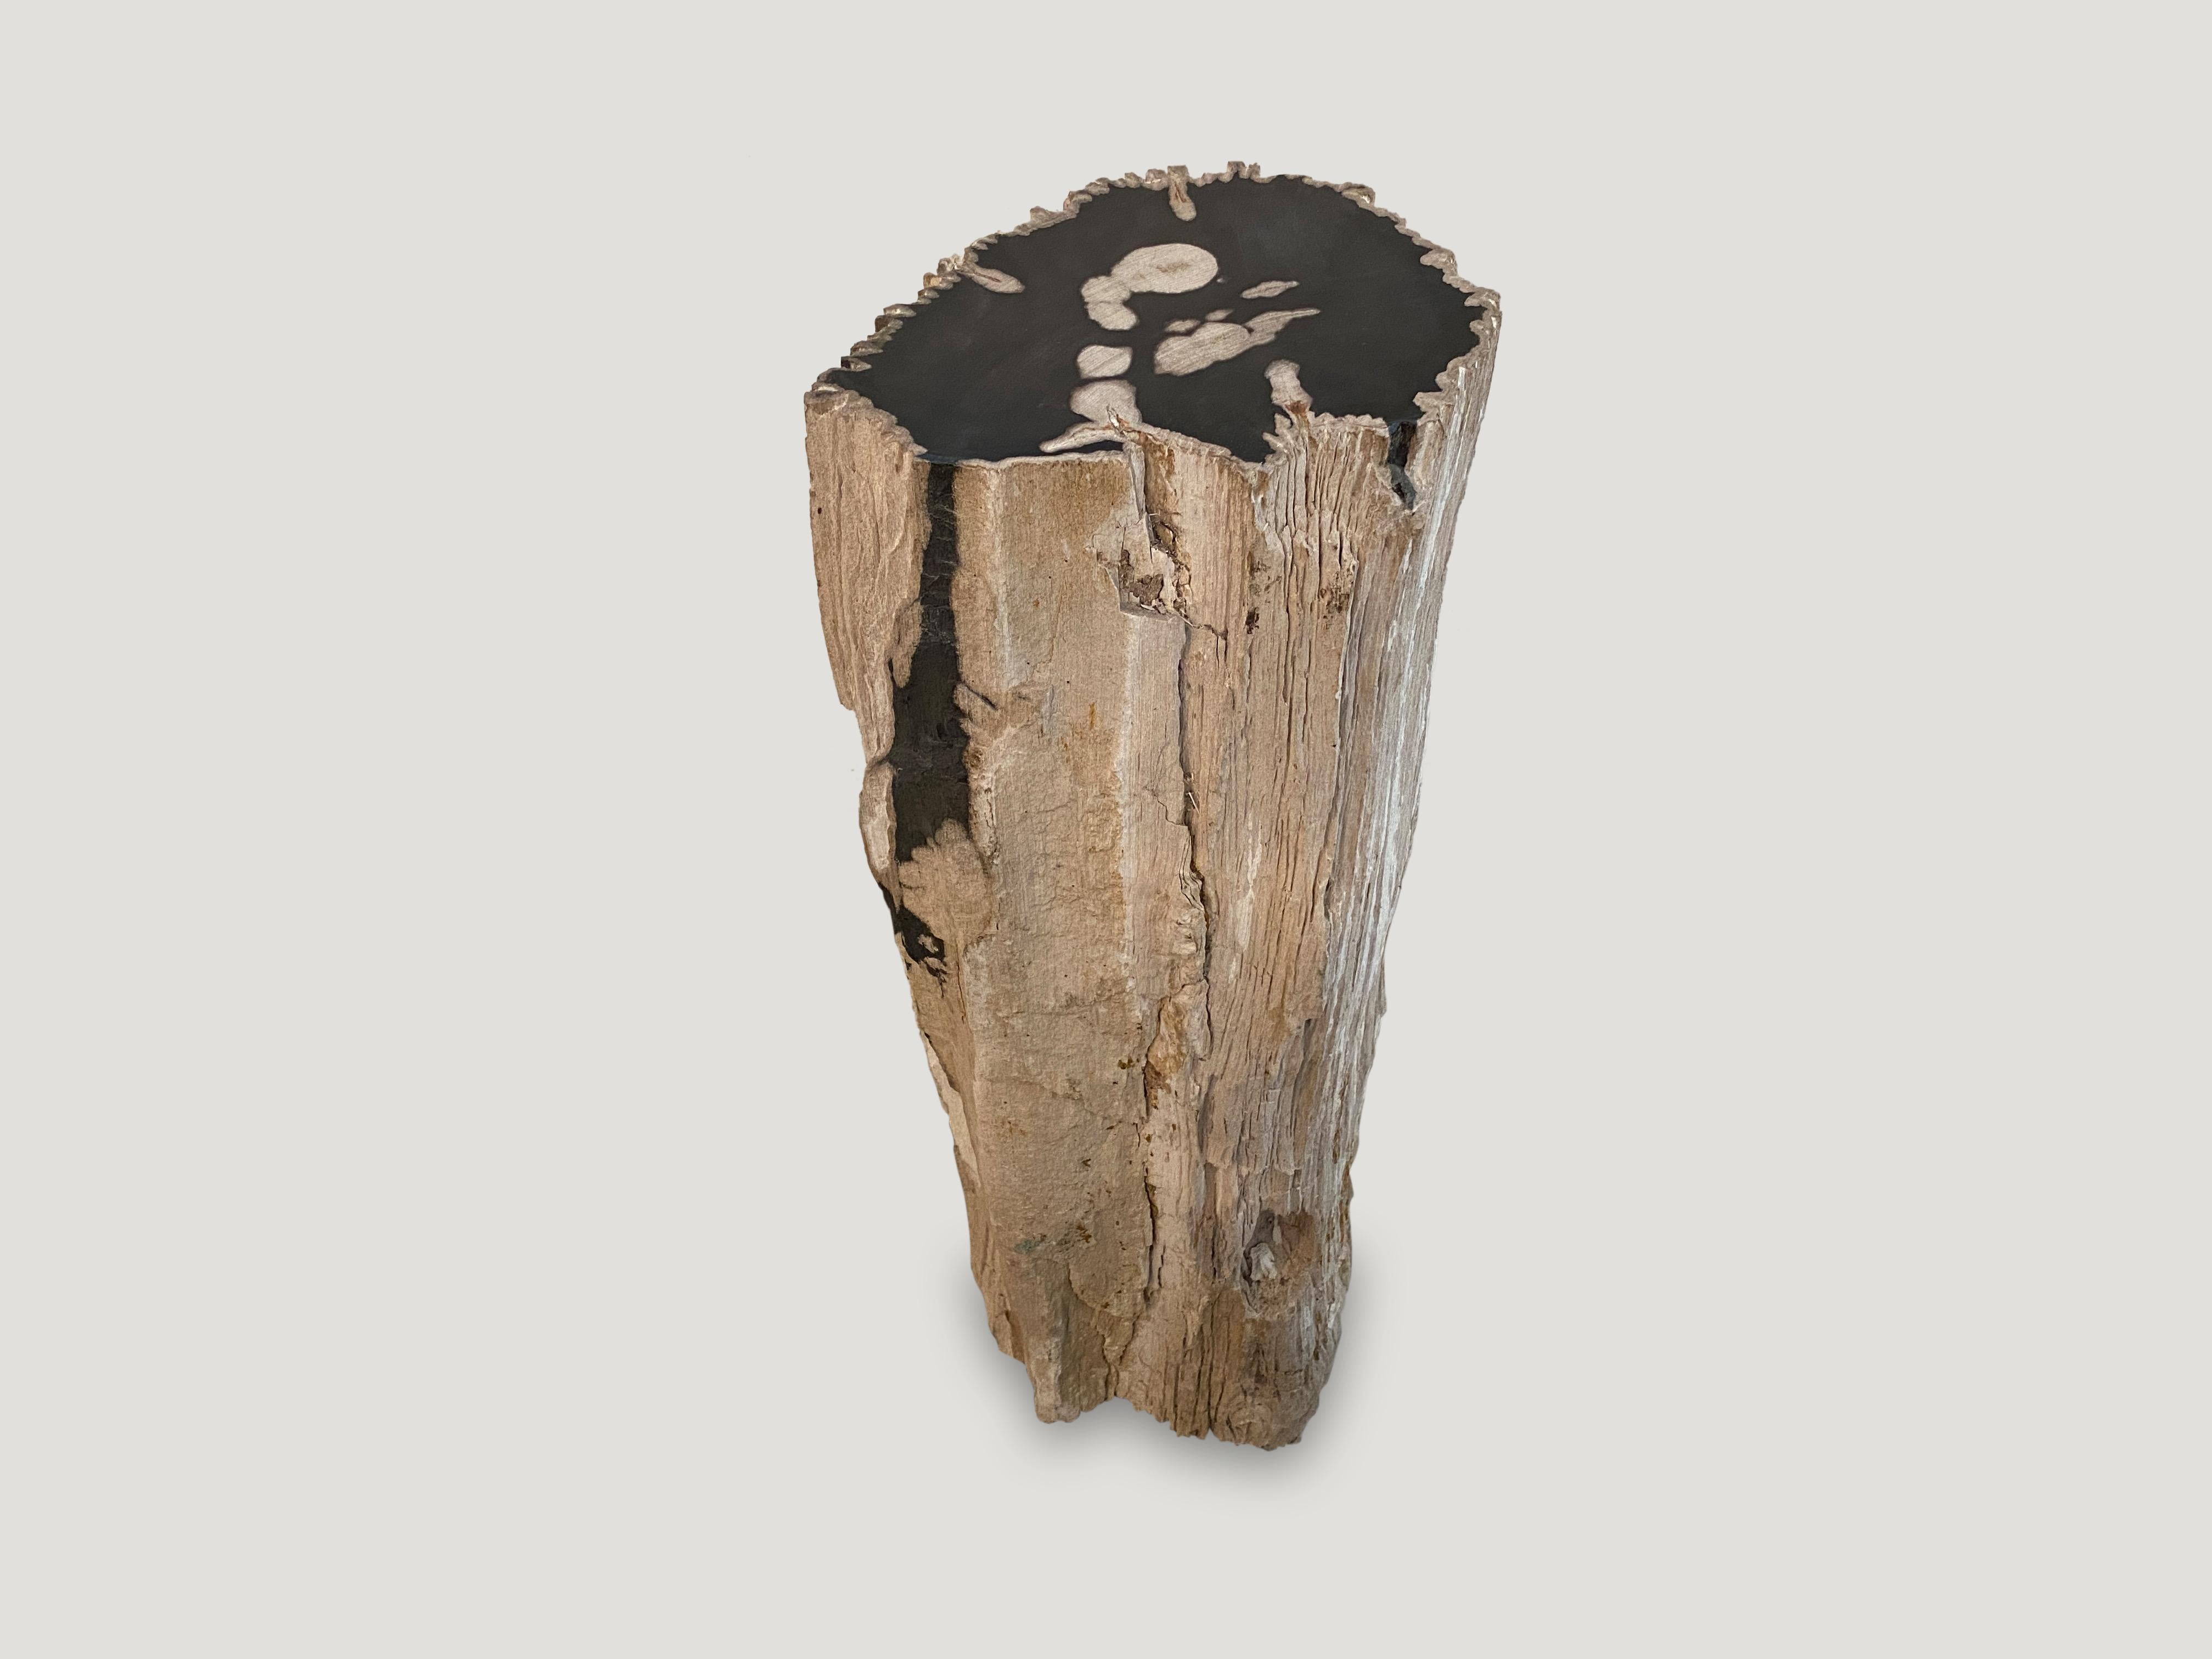 Organic Modern Andrianna Shamaris Contrasting Raw and Polished Petrified Wood Pedestal